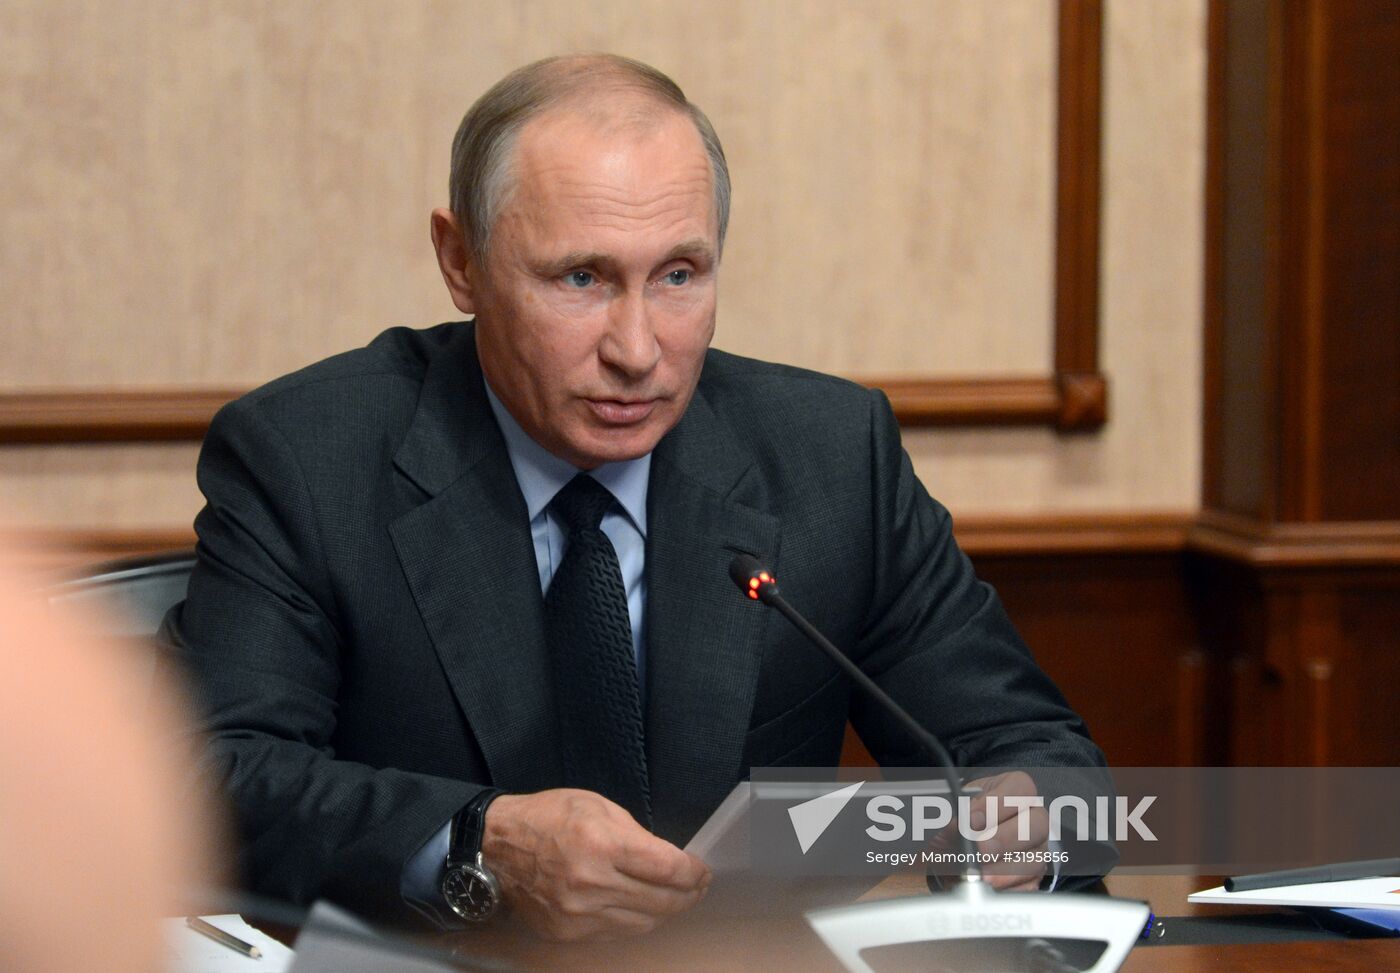 President Vladimir Putin visits Almaz-Antey